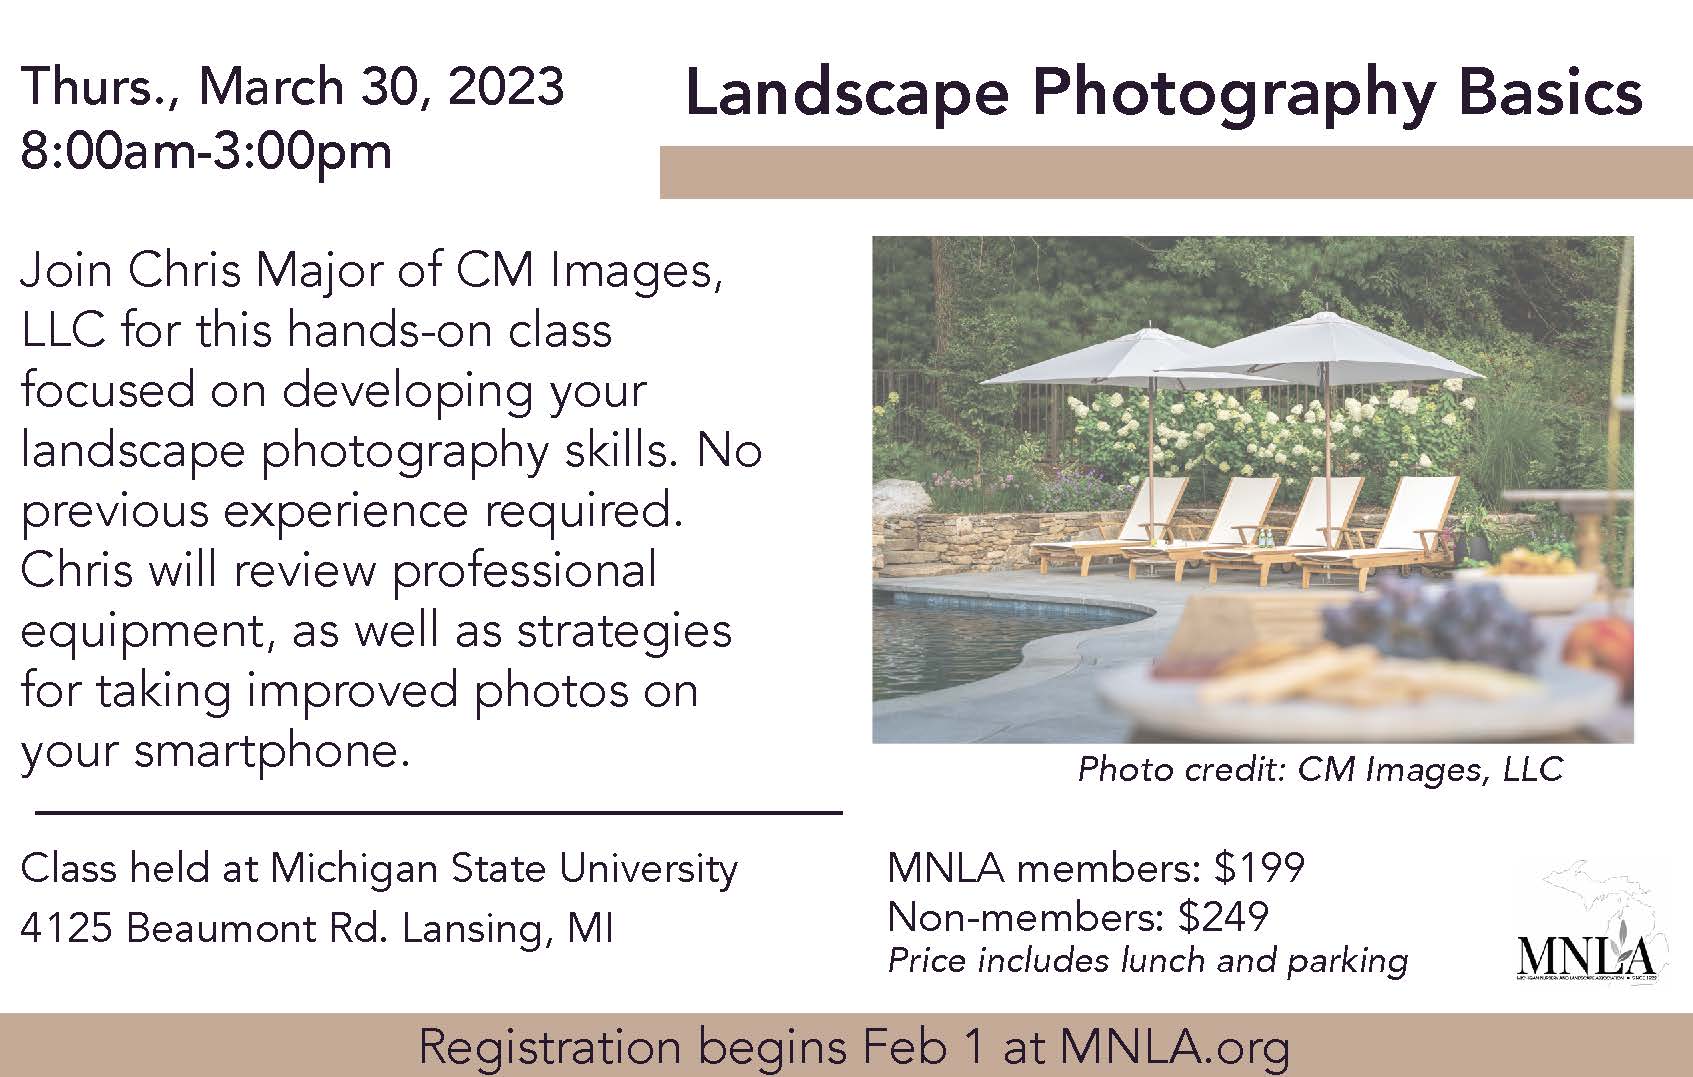 Landscape Photography Basics Class